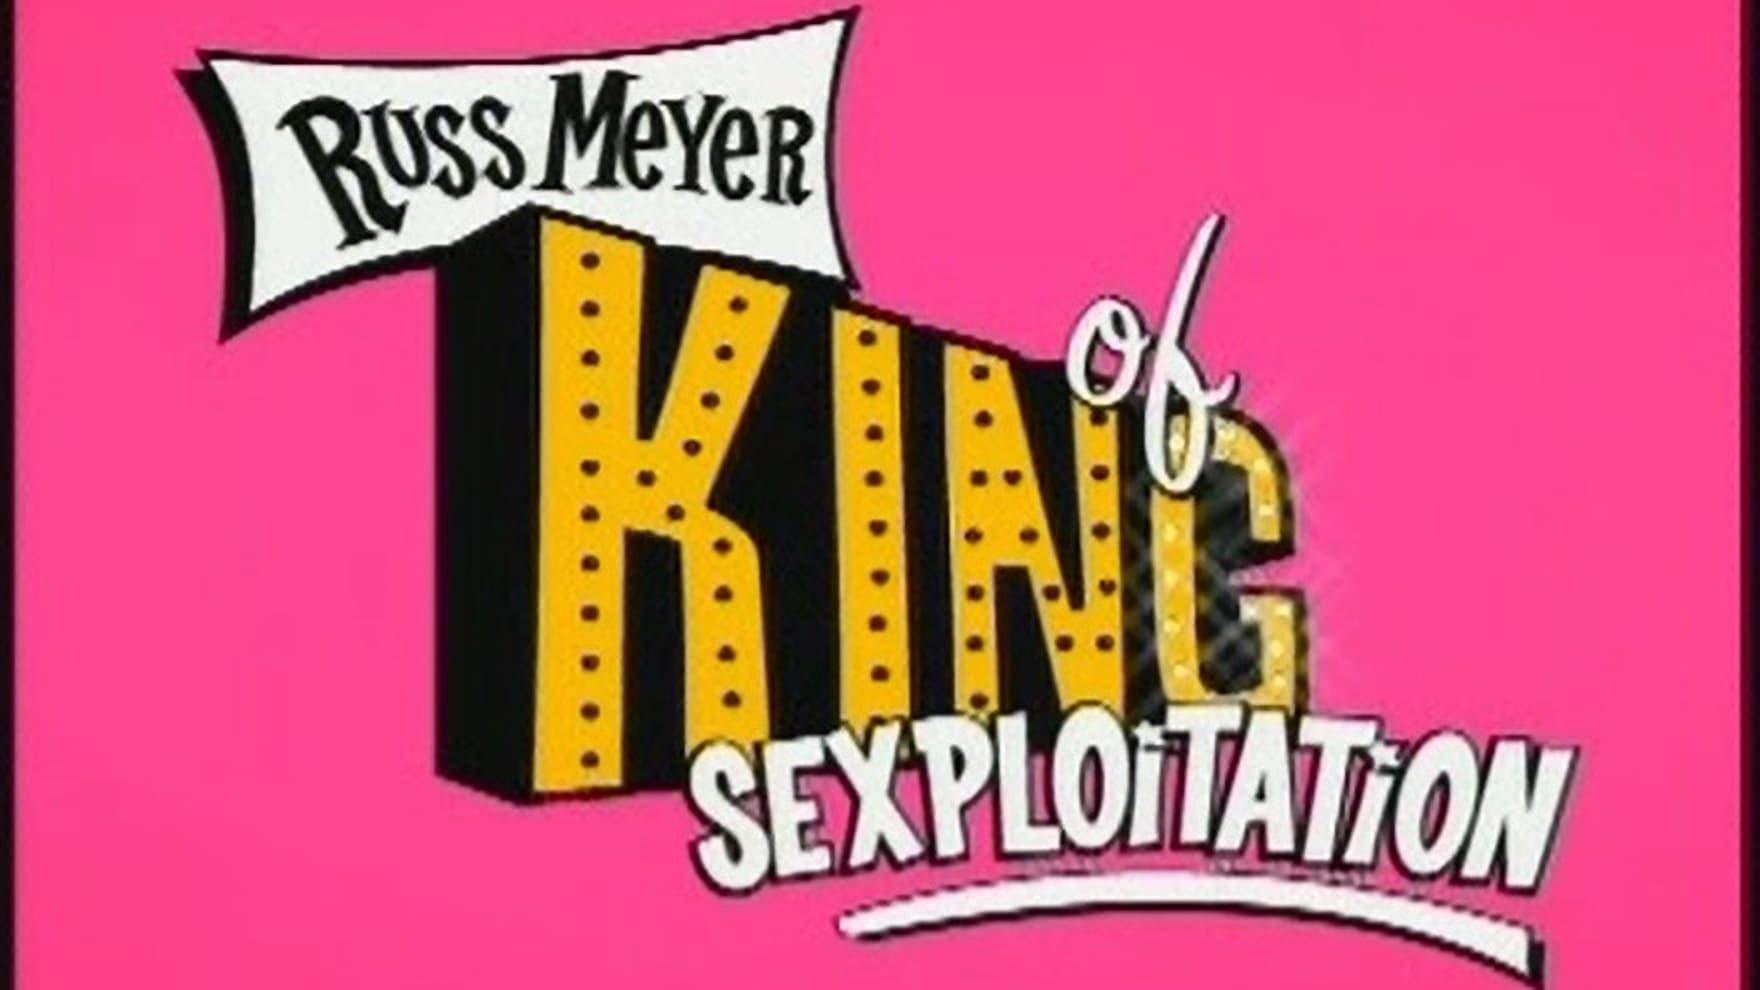 Russ Meyer: King of Sexploitation backdrop